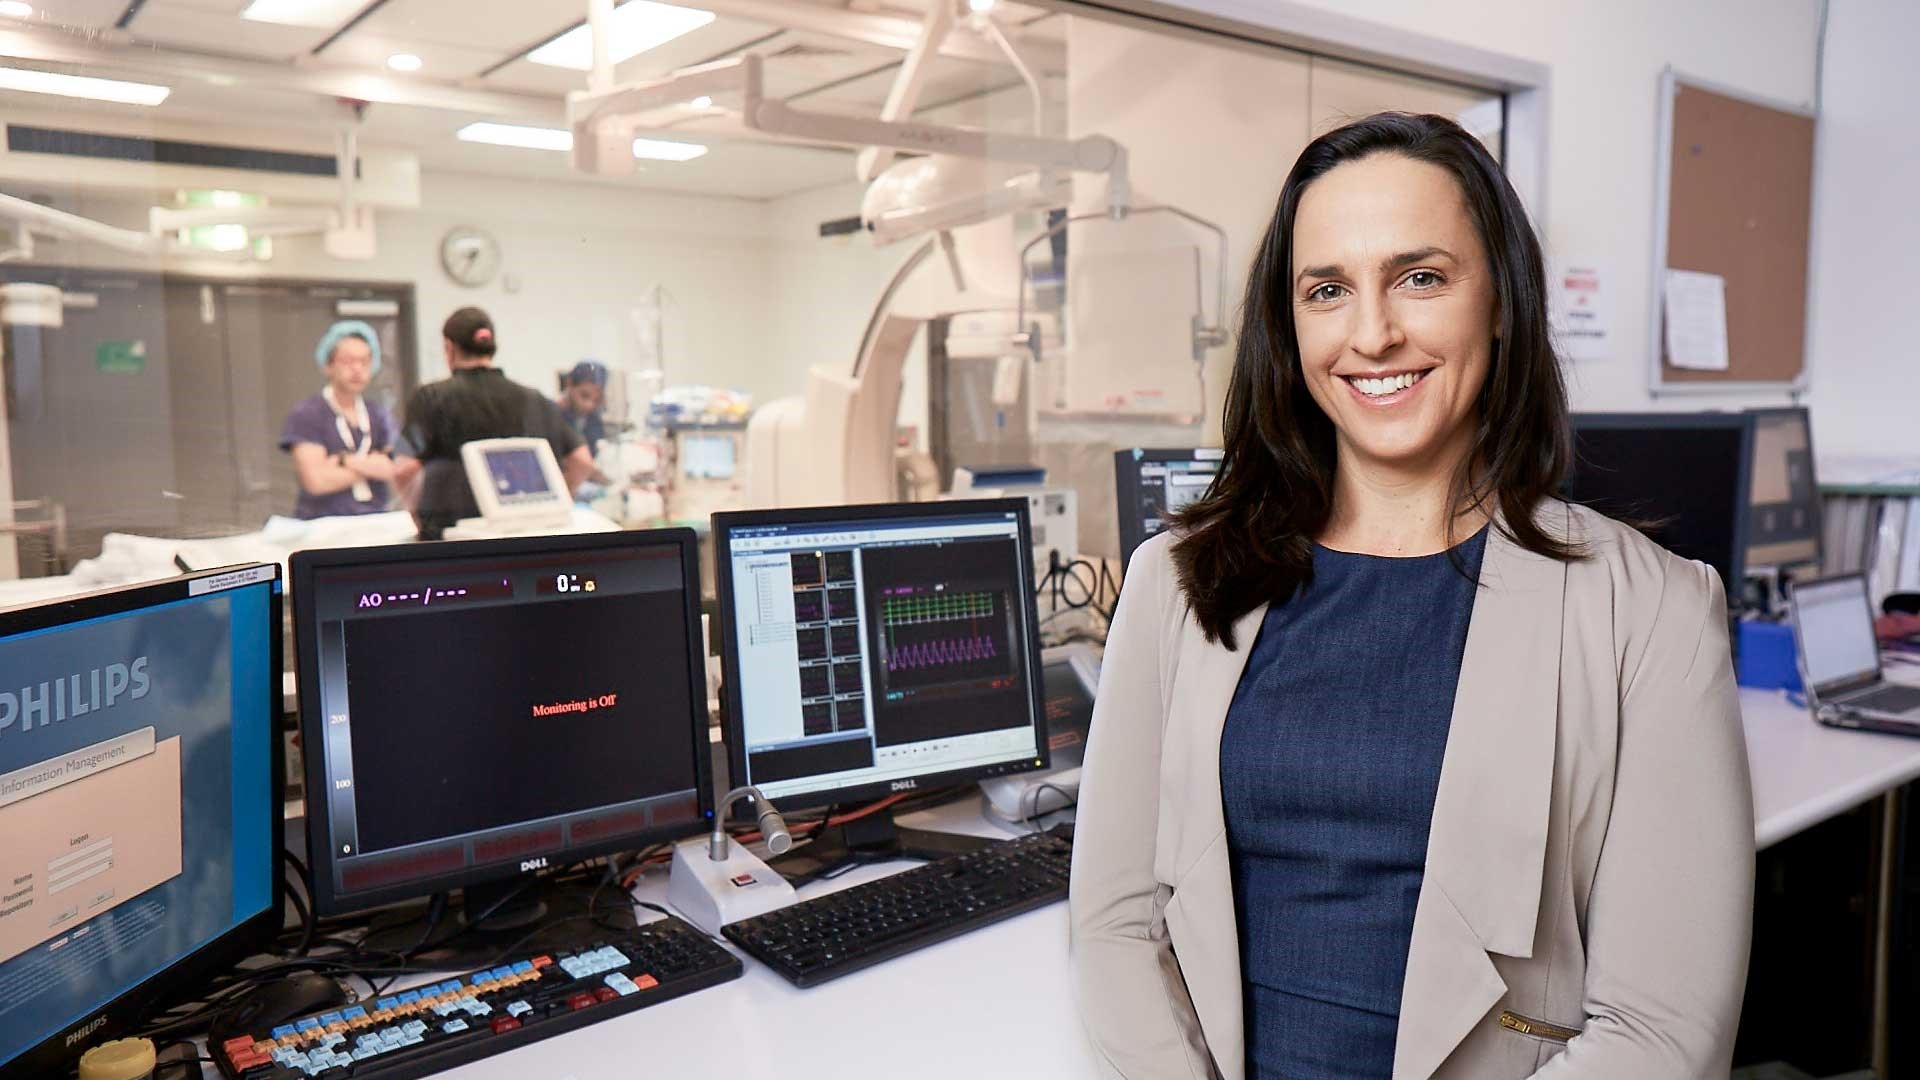 Associate Professor Sarah Zaman in a medical room smiling at the camera